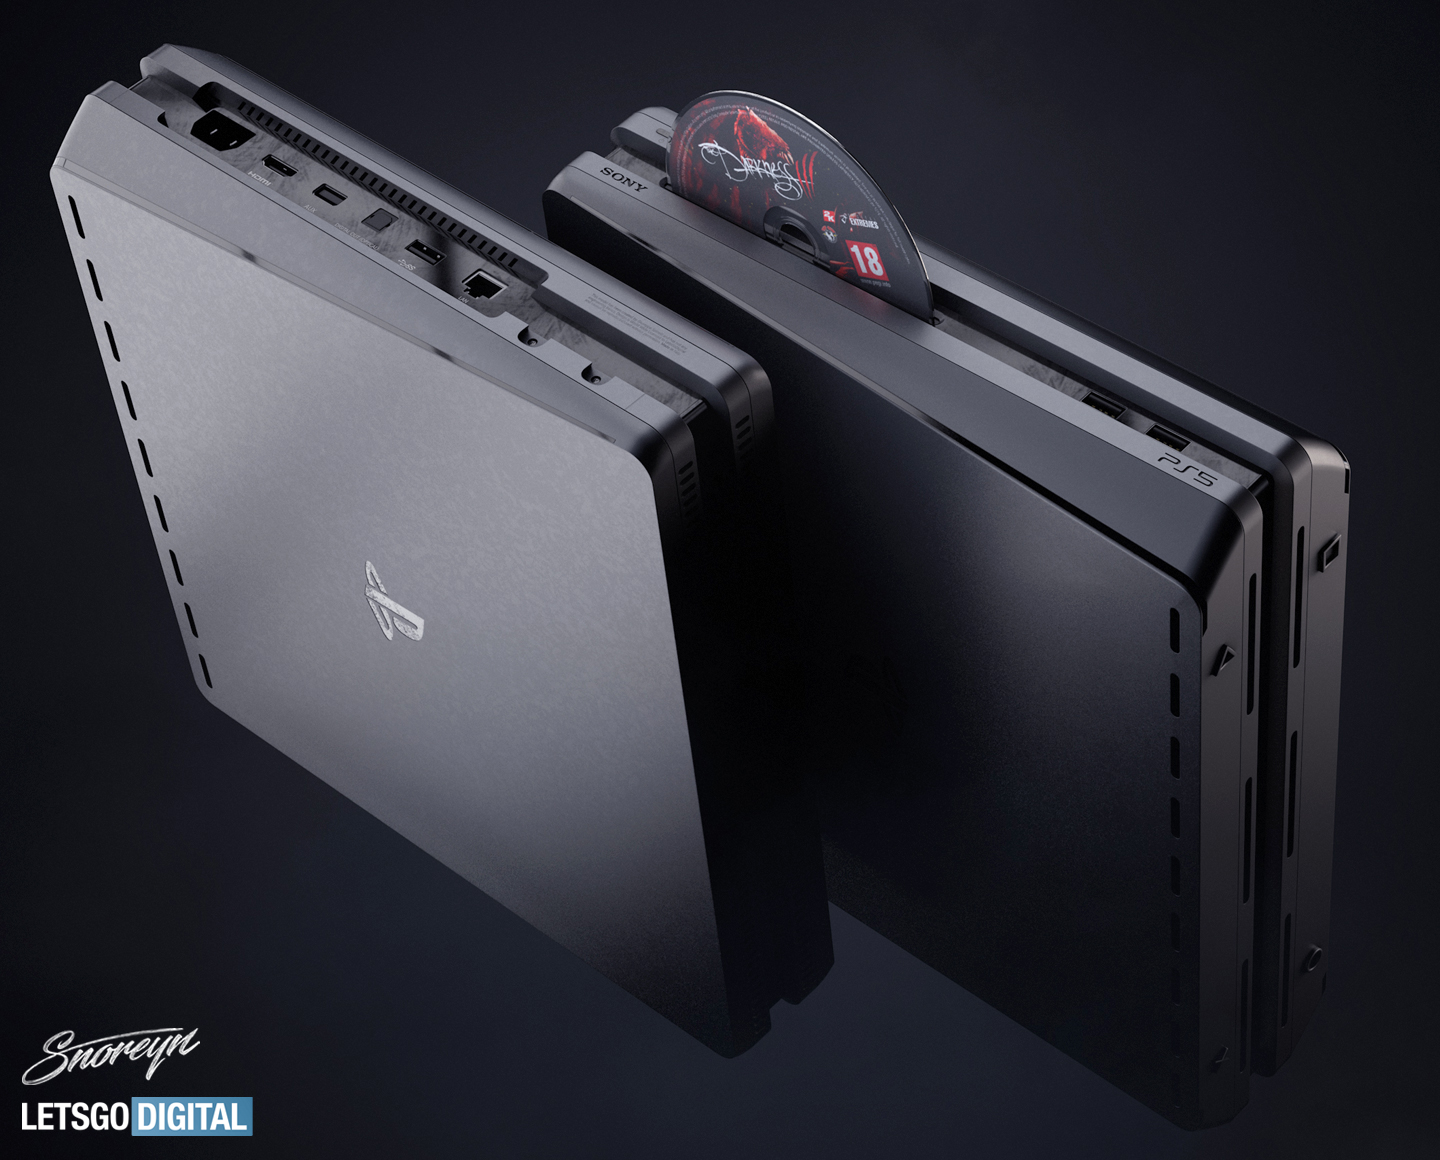 Дизайн PS5 показали после анонса геймпада DualSense